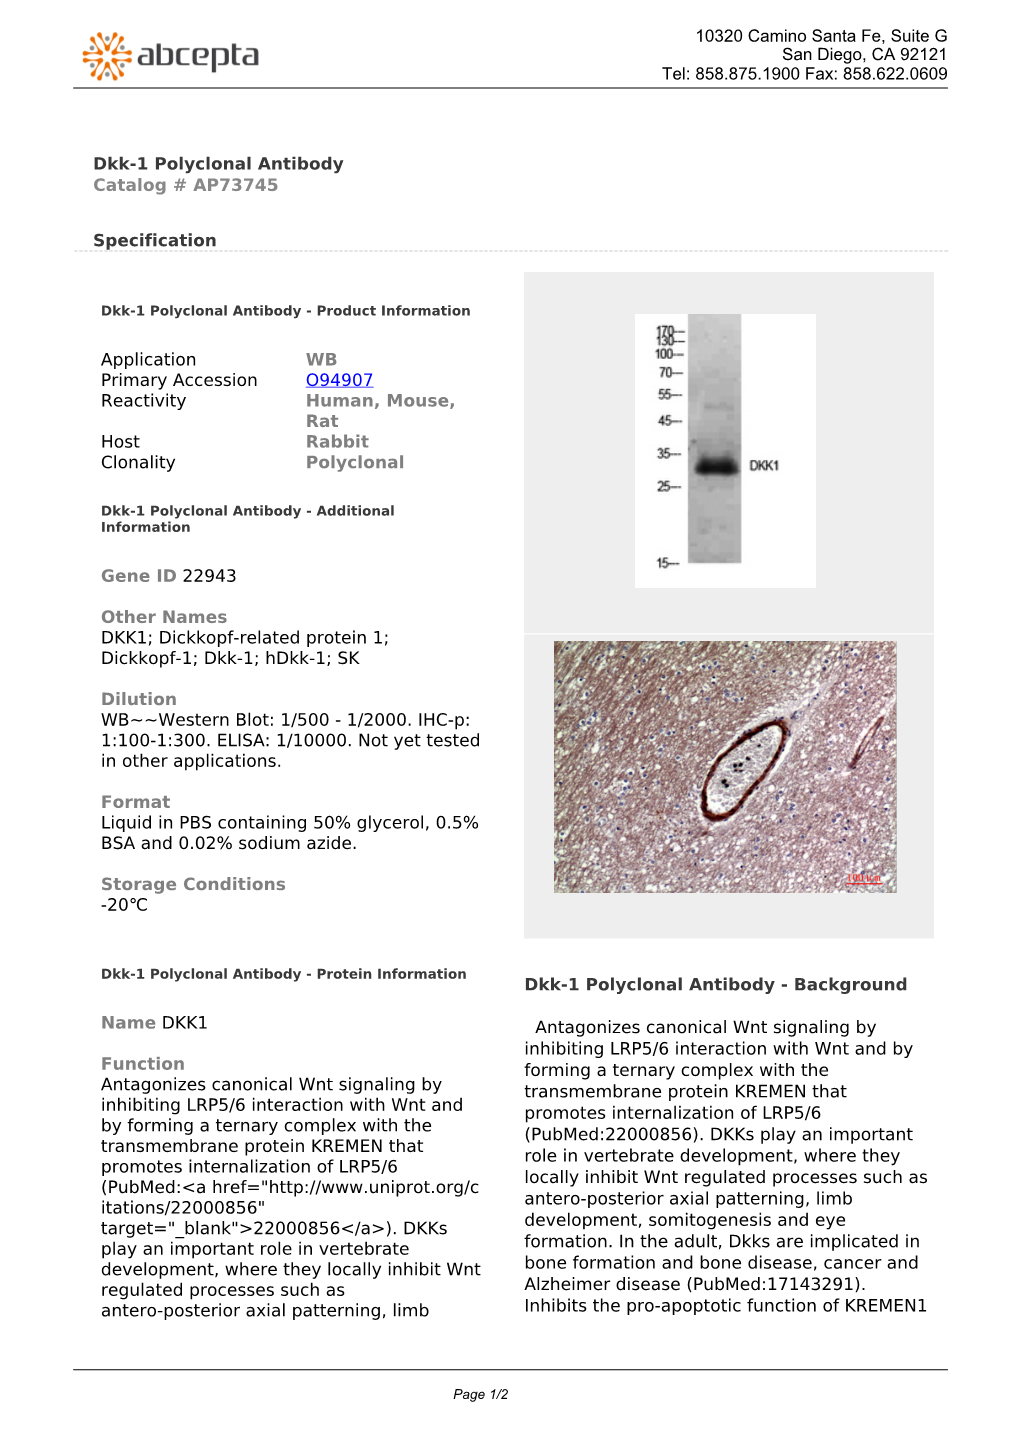 Dkk-1 Polyclonal Antibody Catalog # AP73745